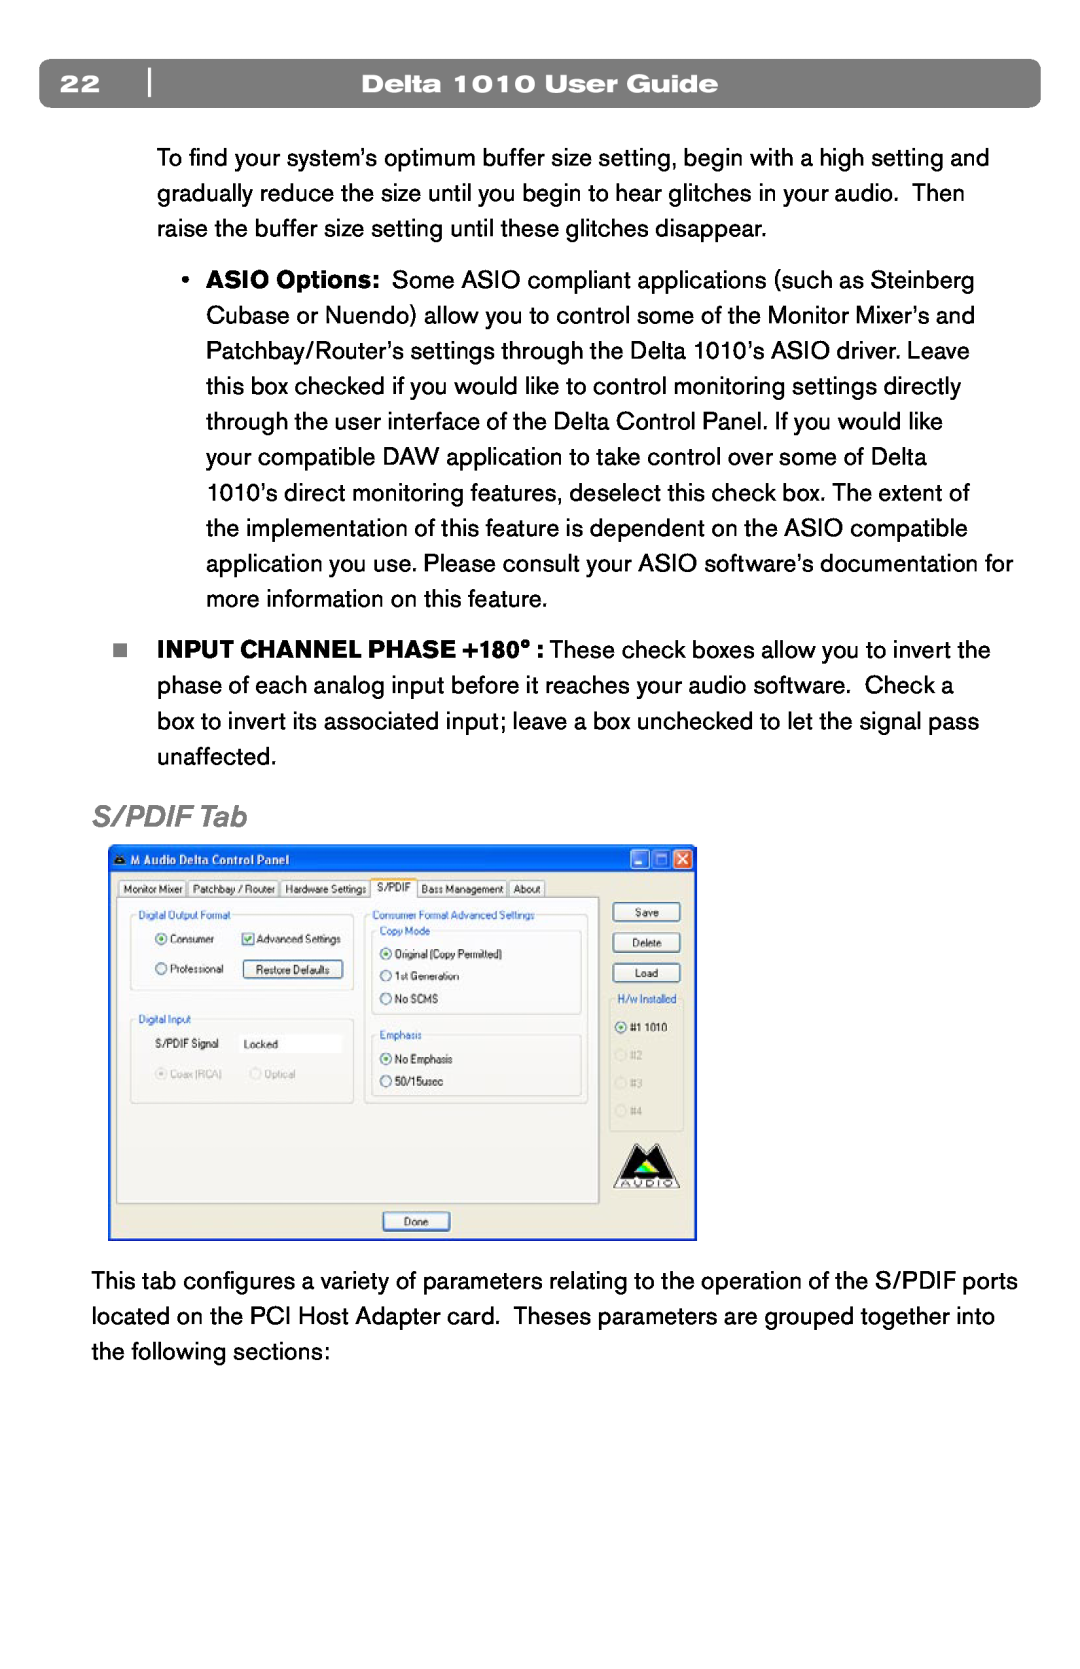 M-Audio DELTA 1010 manual S/PDIF Tab, Delta 1010 User Guide 